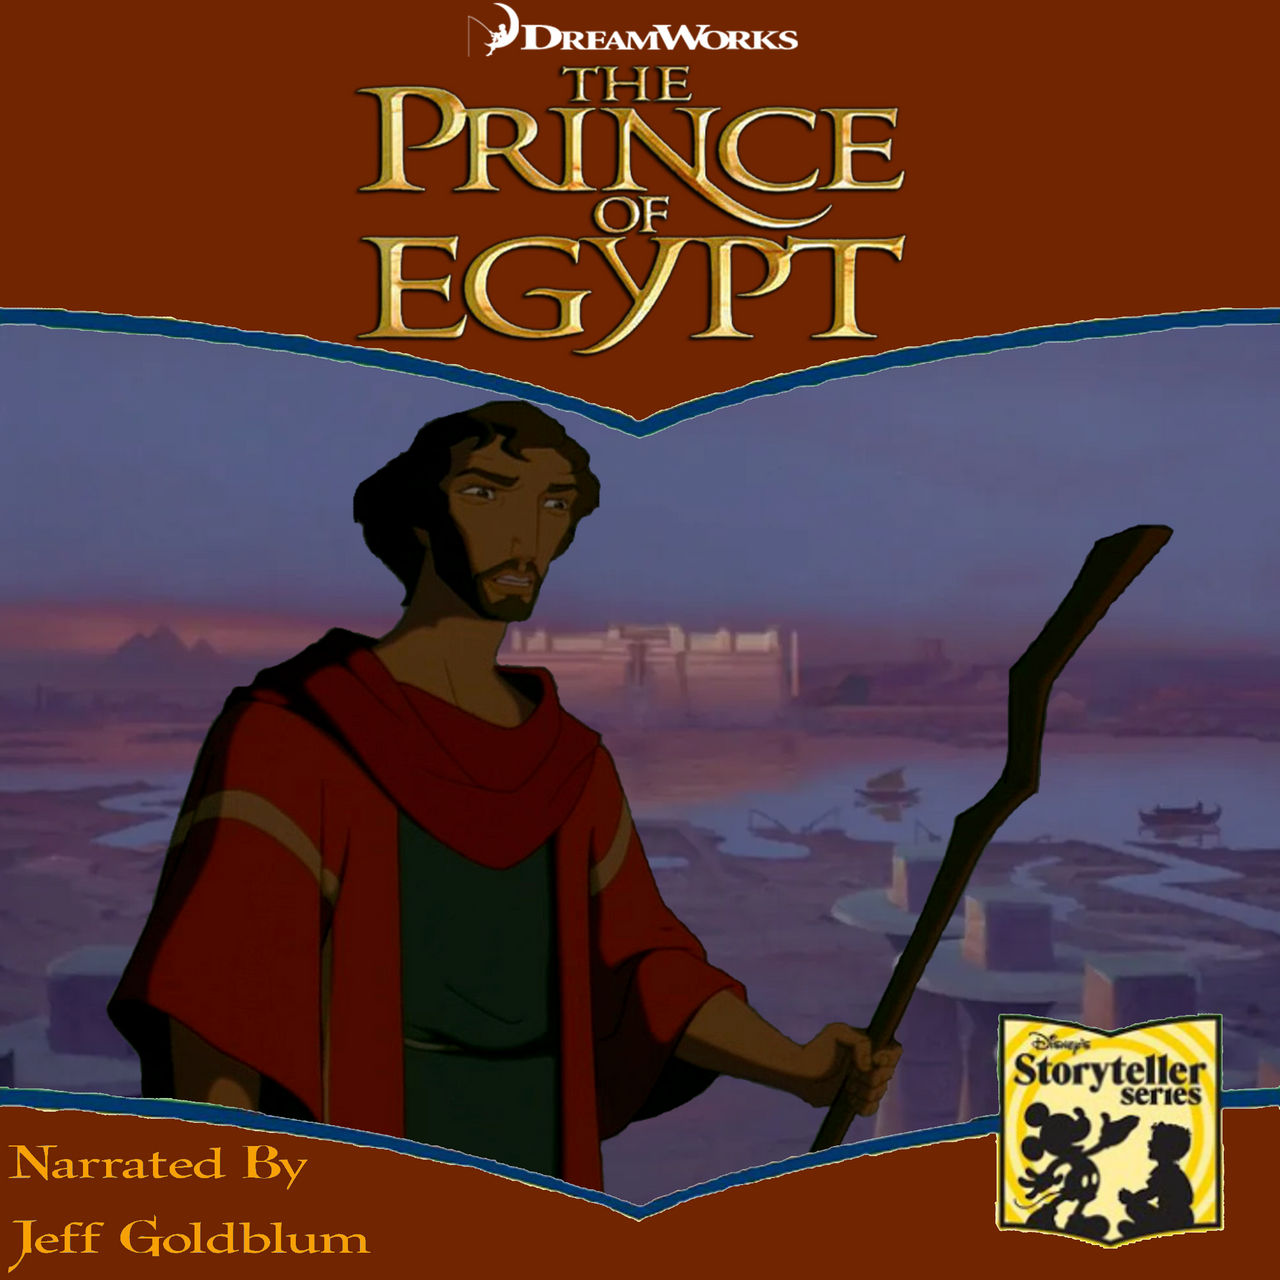 The Prince Of Egypt Non Disney Storyteller Cover By Batboy101 On Deviantart